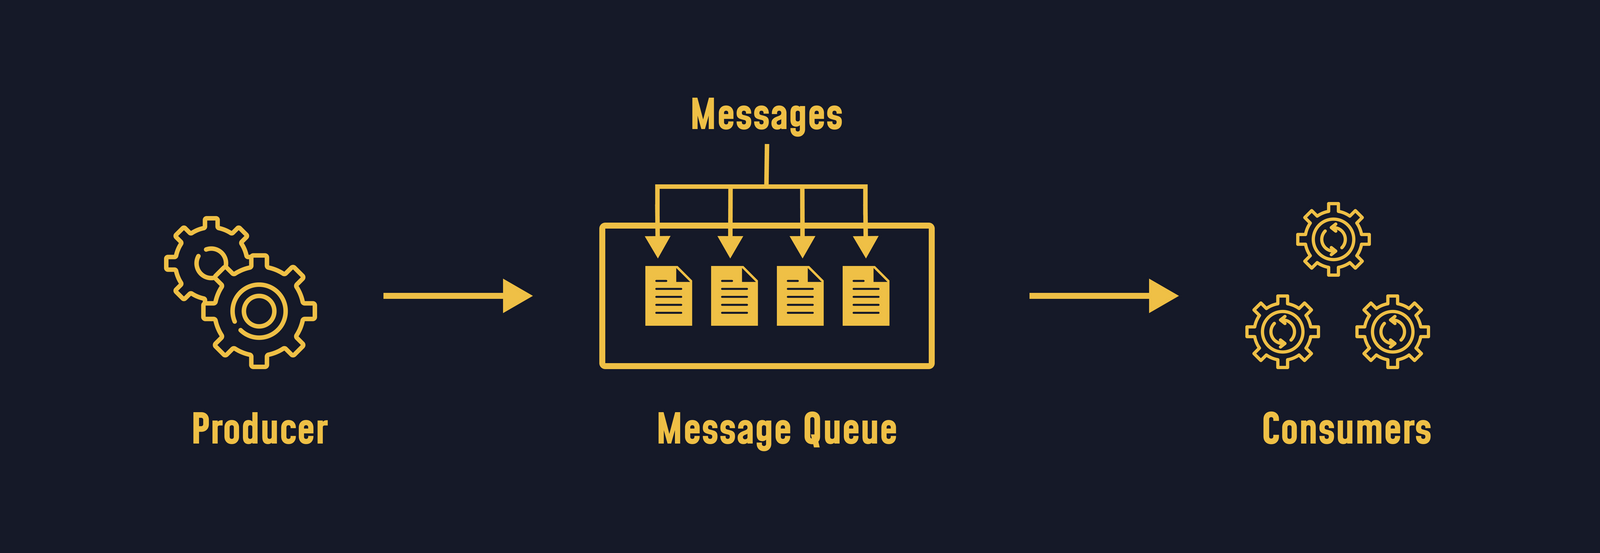 message queue system